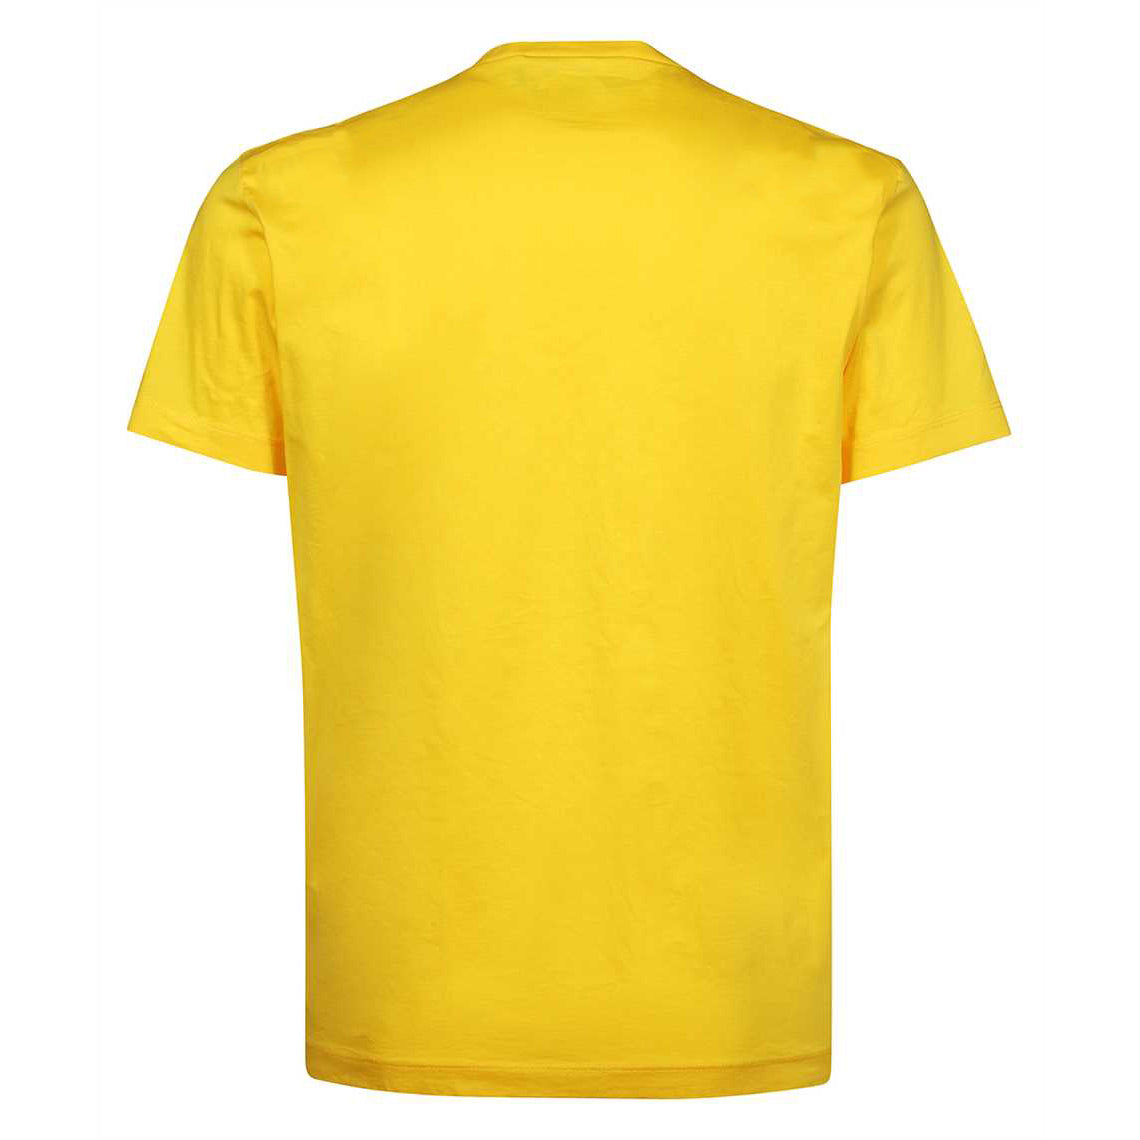 Dsquared2 Men's Waves Logo T-shirt Yellow XXX Large